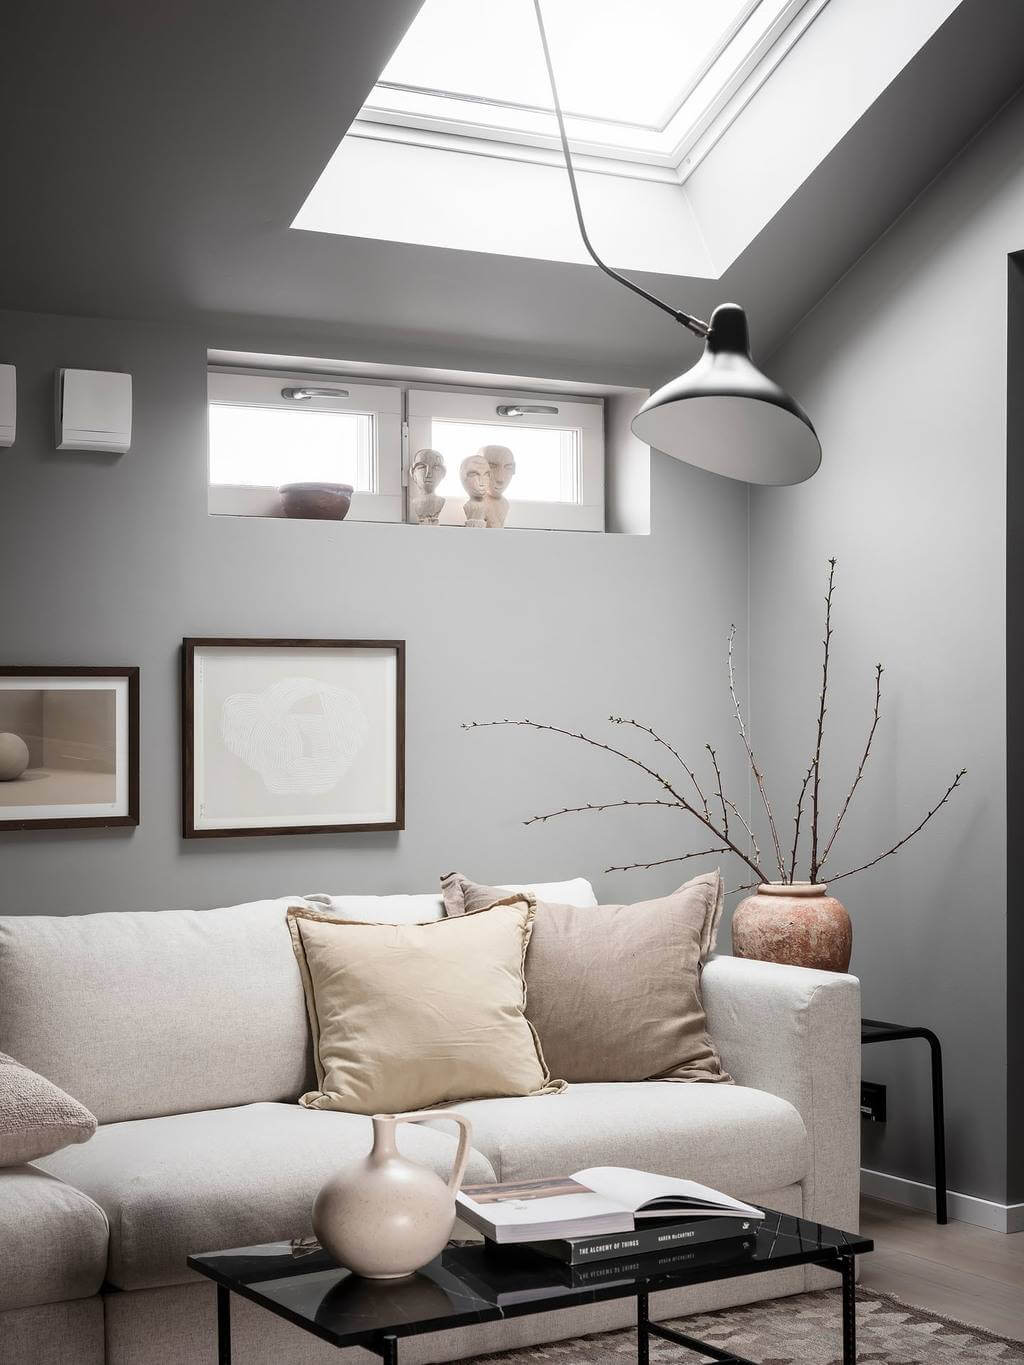 sitting-room-slanted-ceiling-skylight-gray-walls-nordroom